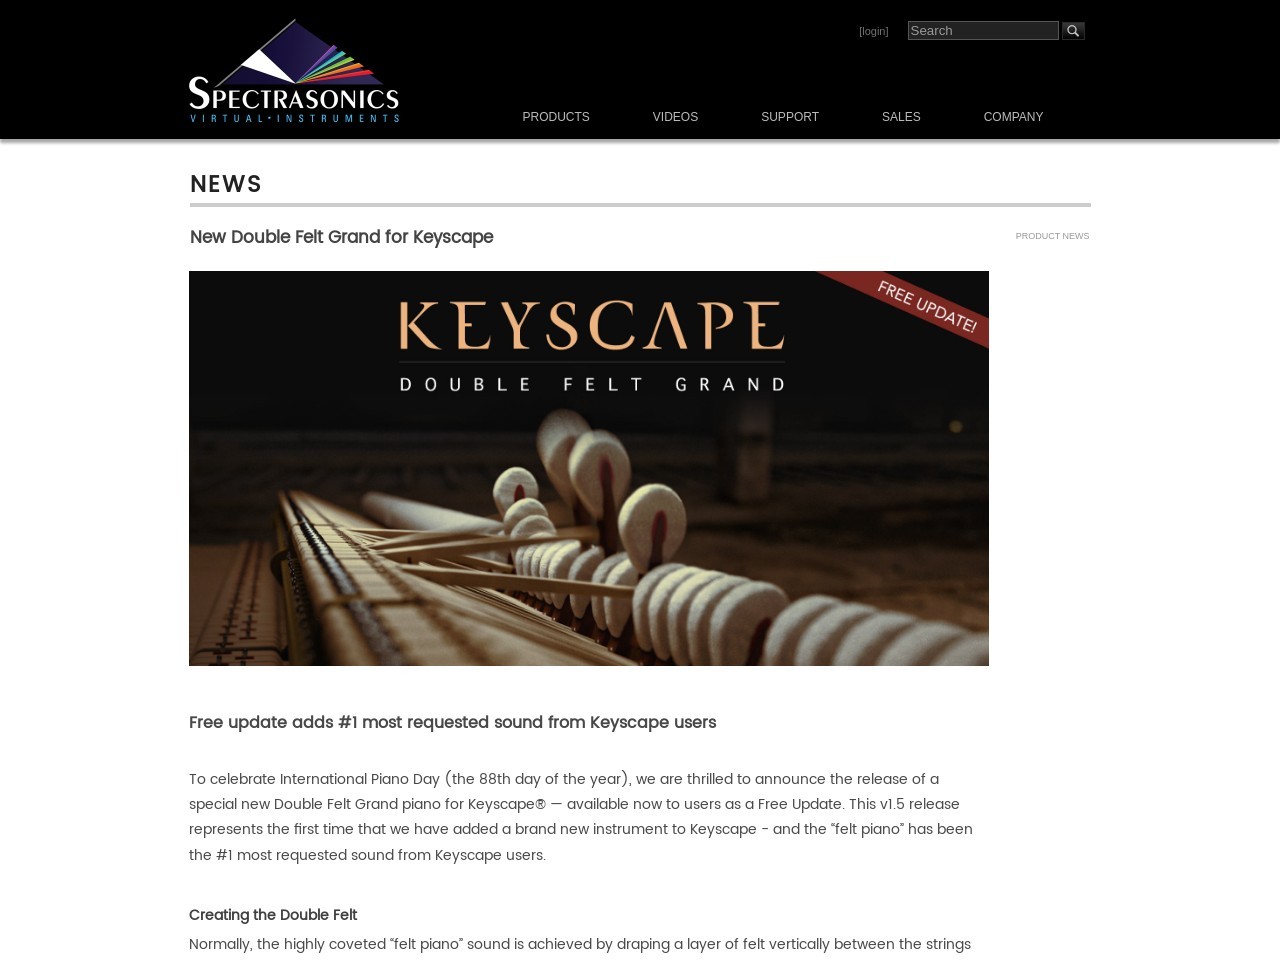 Spectrasonics News - New Double Felt Grand for Keyscape